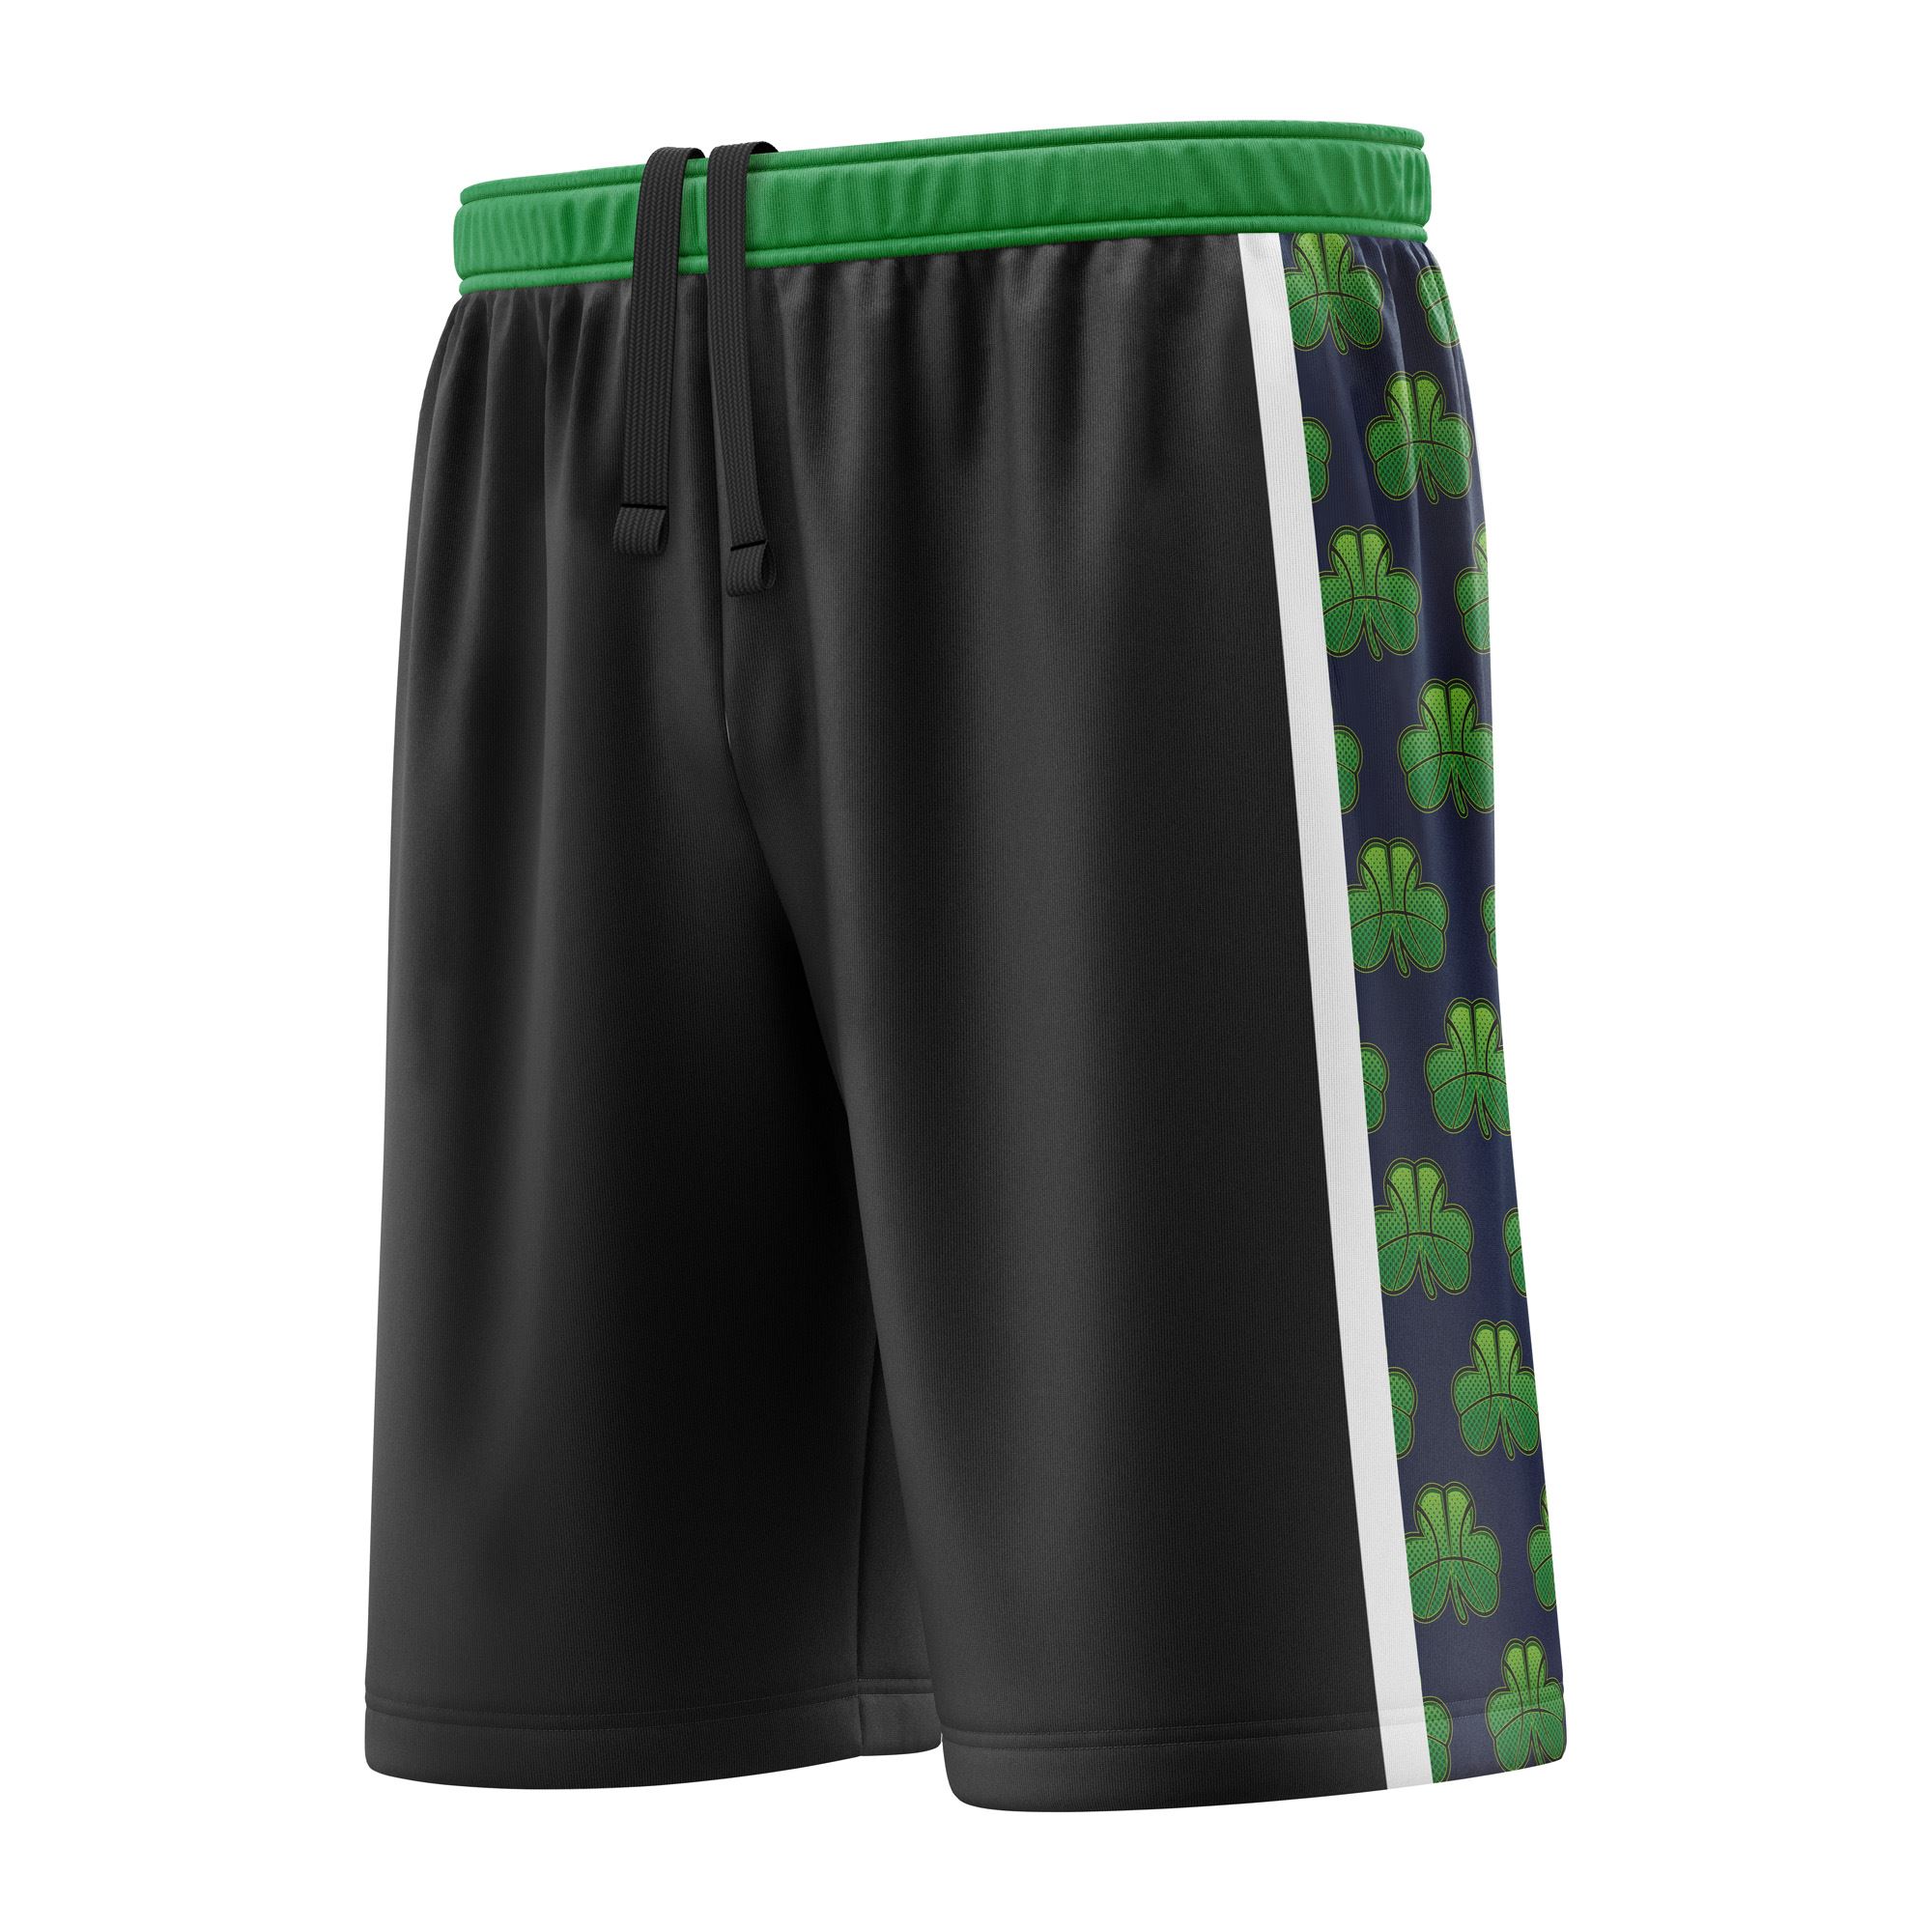 Full-Dye Basketball Shorts - Pro-line Pattern-Left view